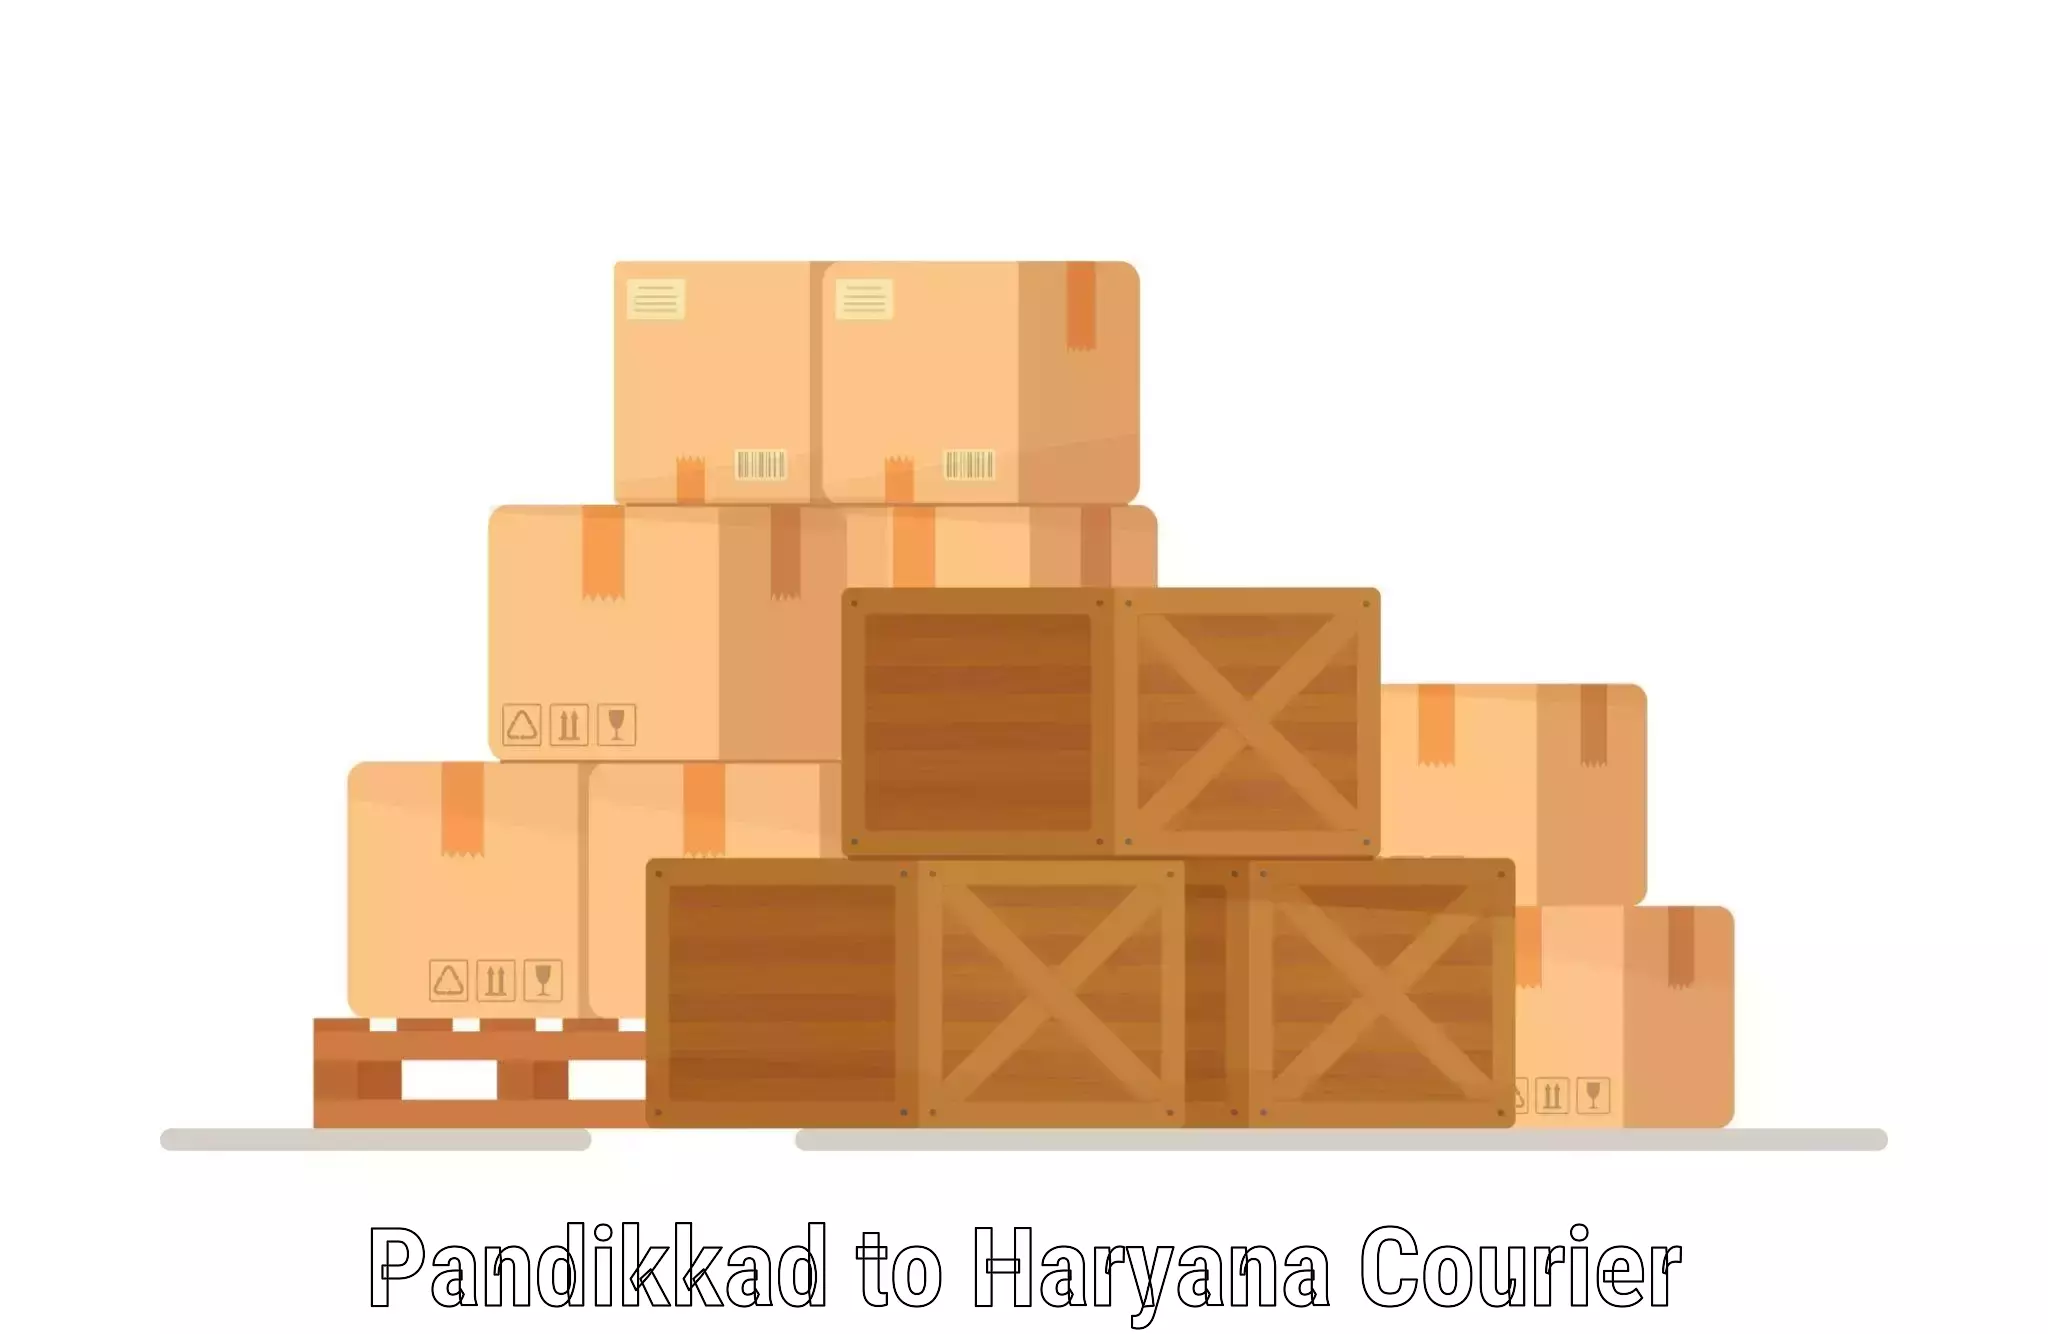 Customized shipping options Pandikkad to Gurugram